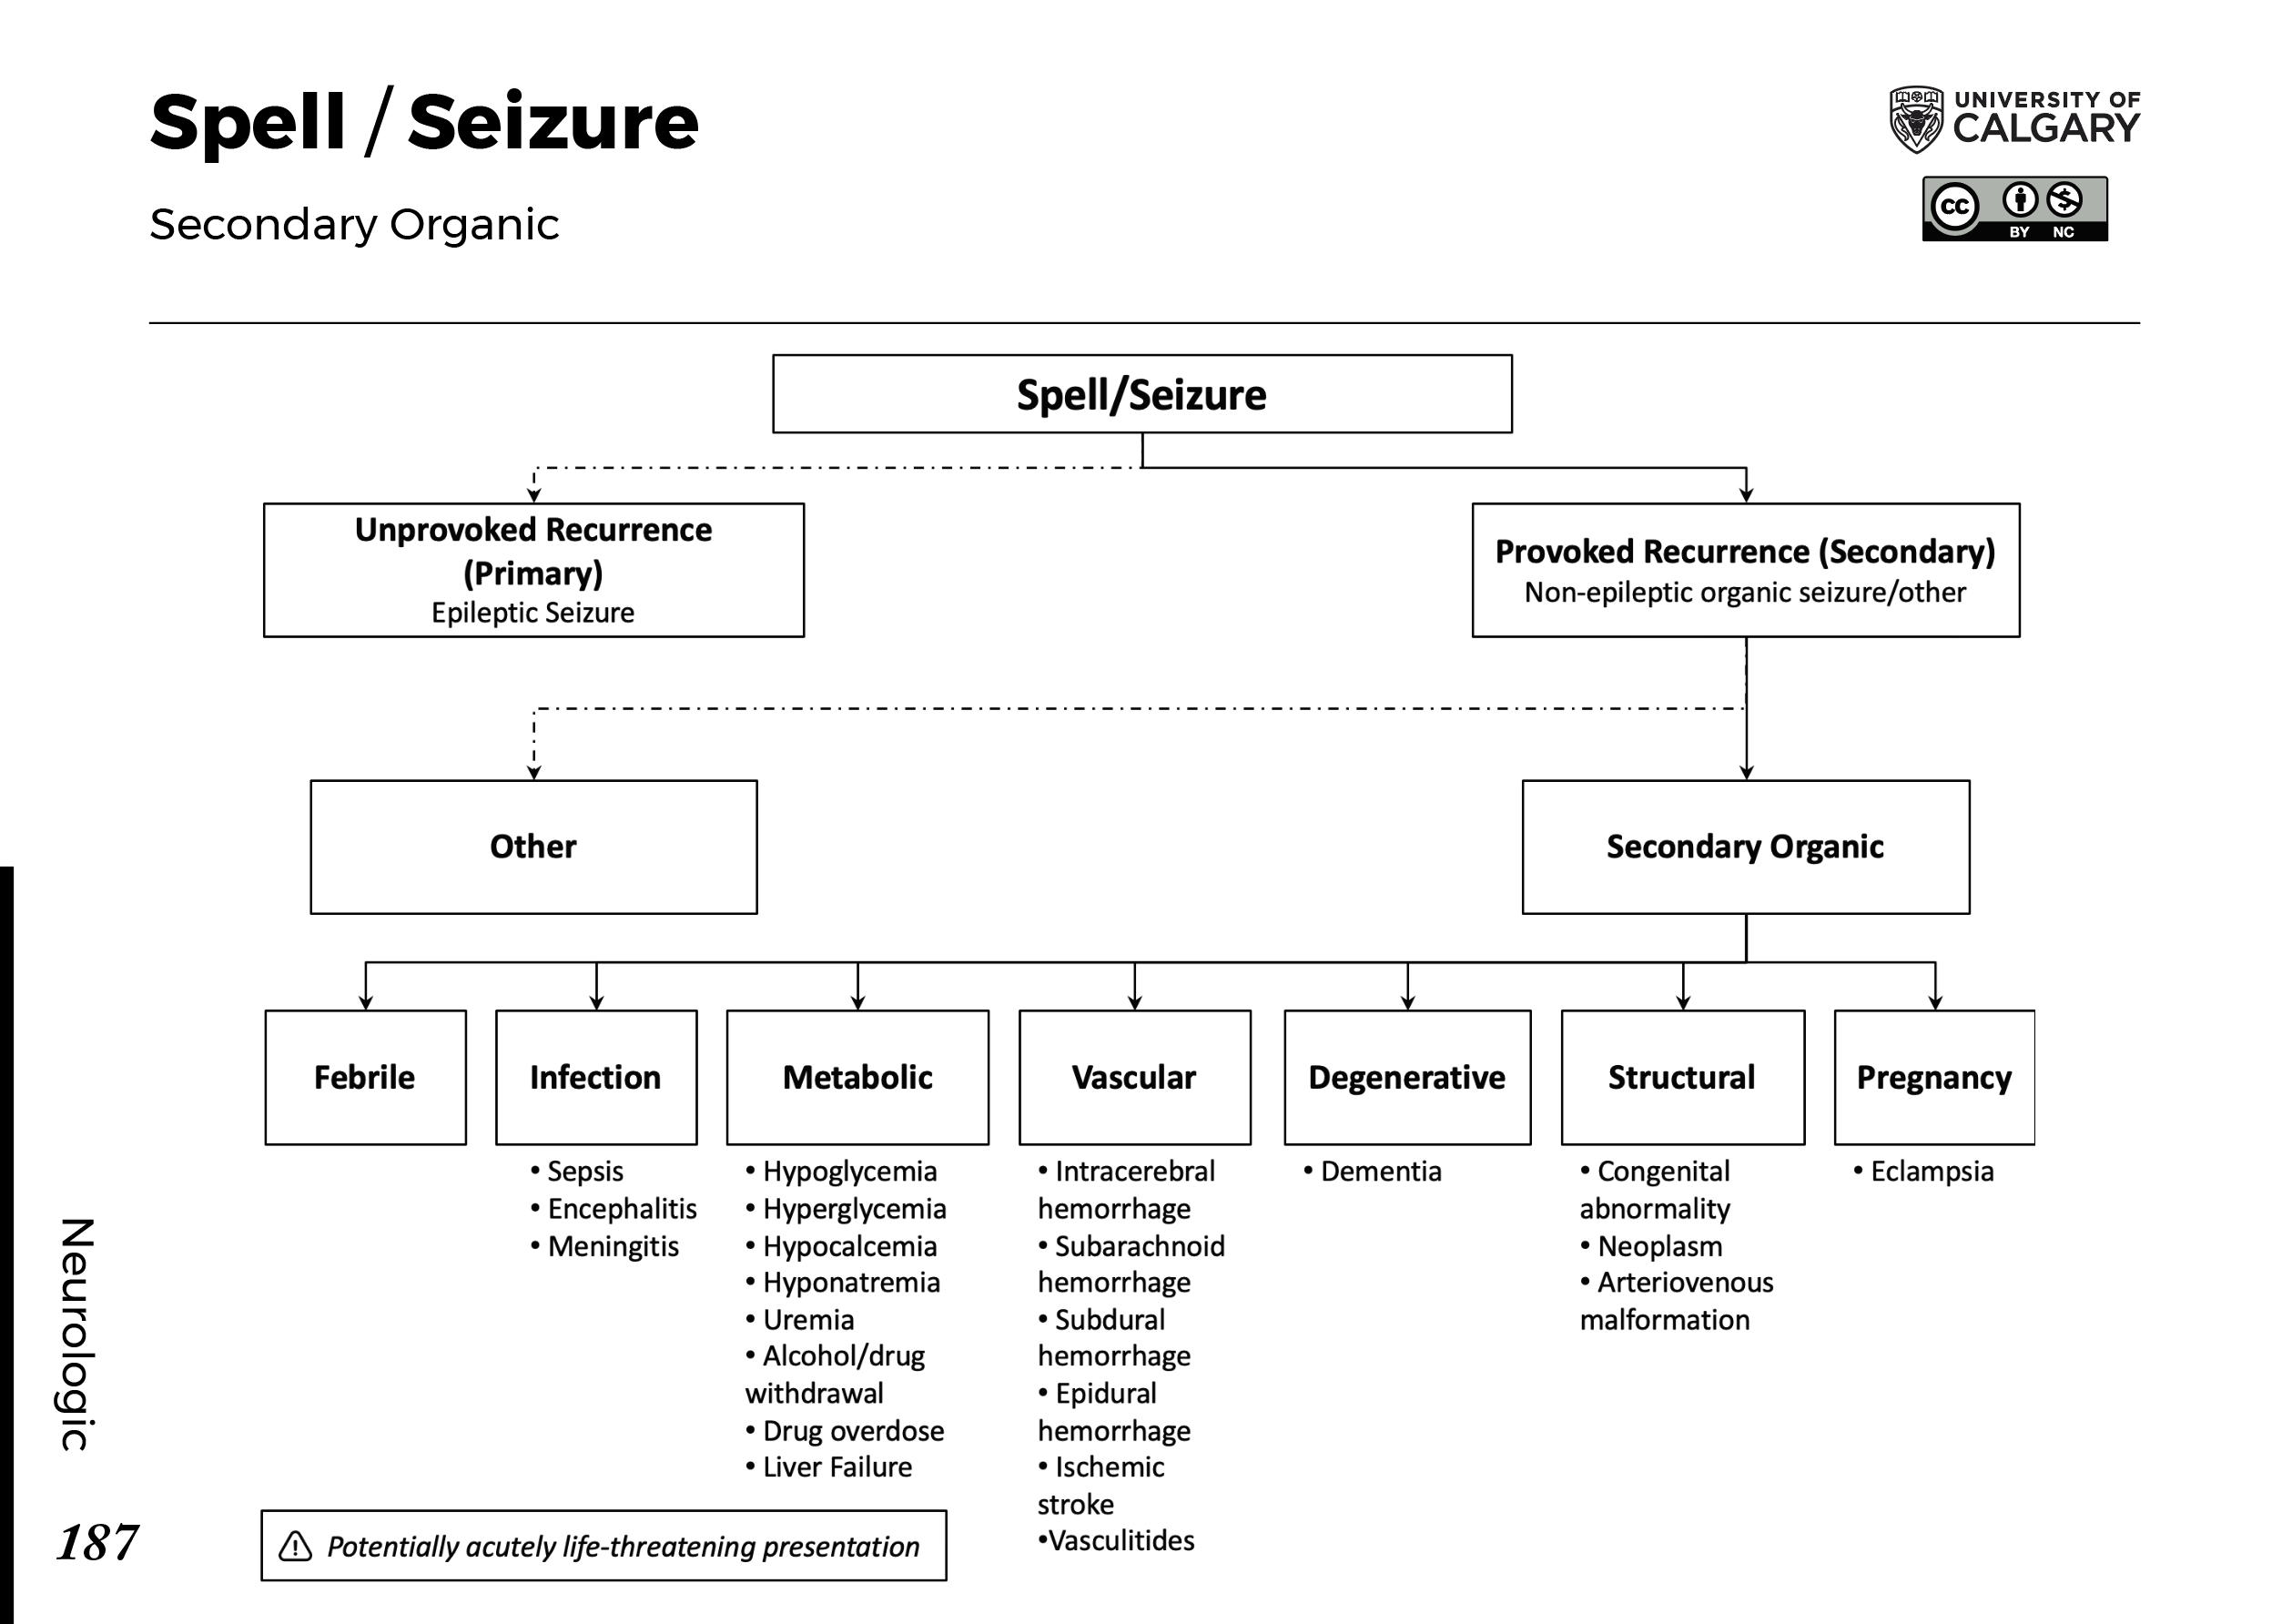 SPELL/SEIZURE: Secondary Organic Scheme